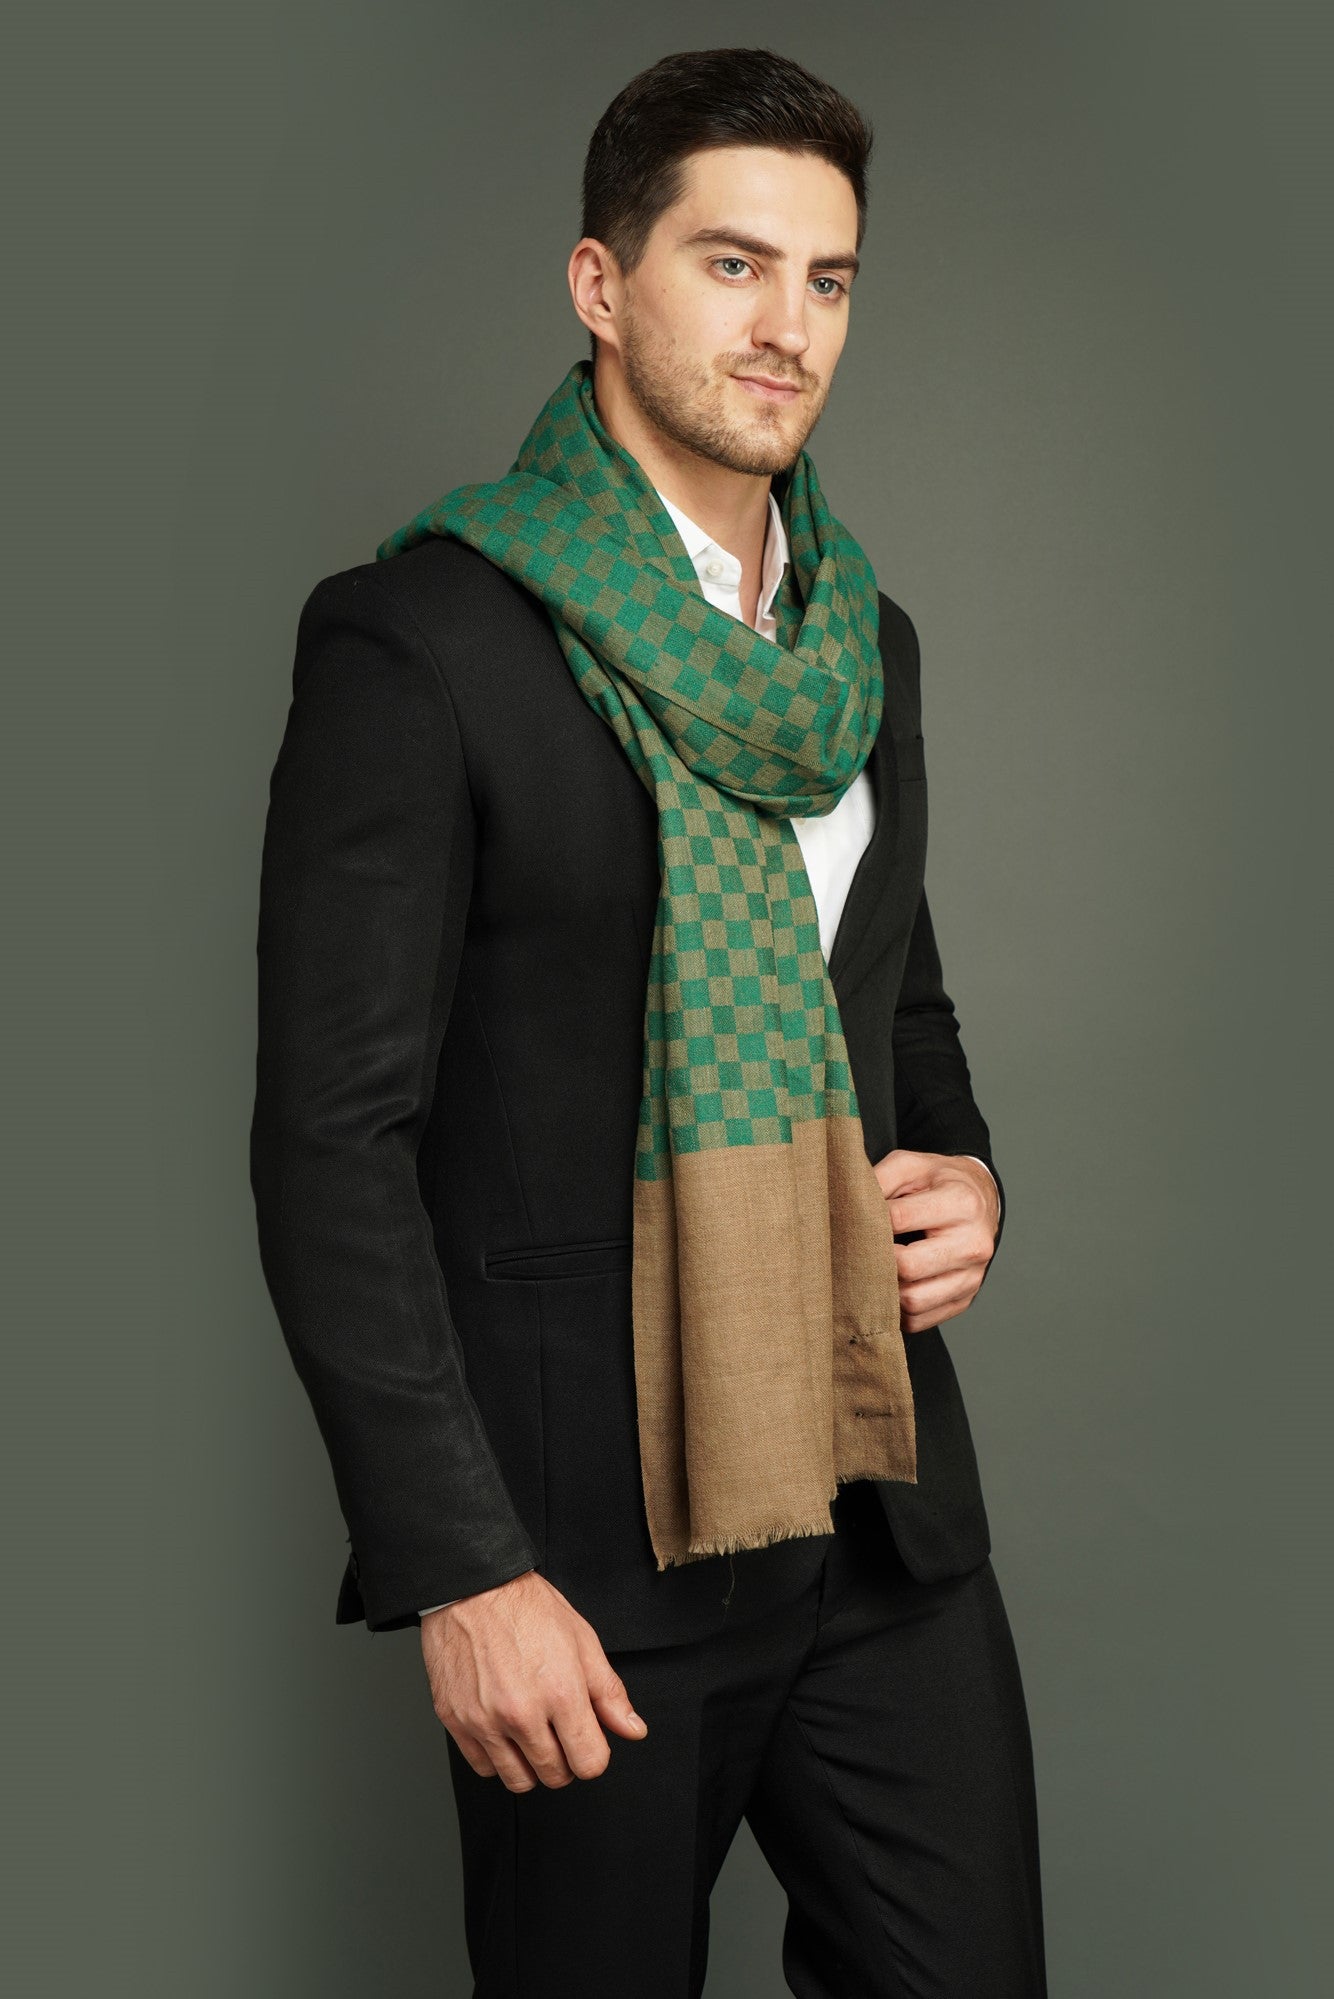 Cashmere Fine Wool,Checkered Design